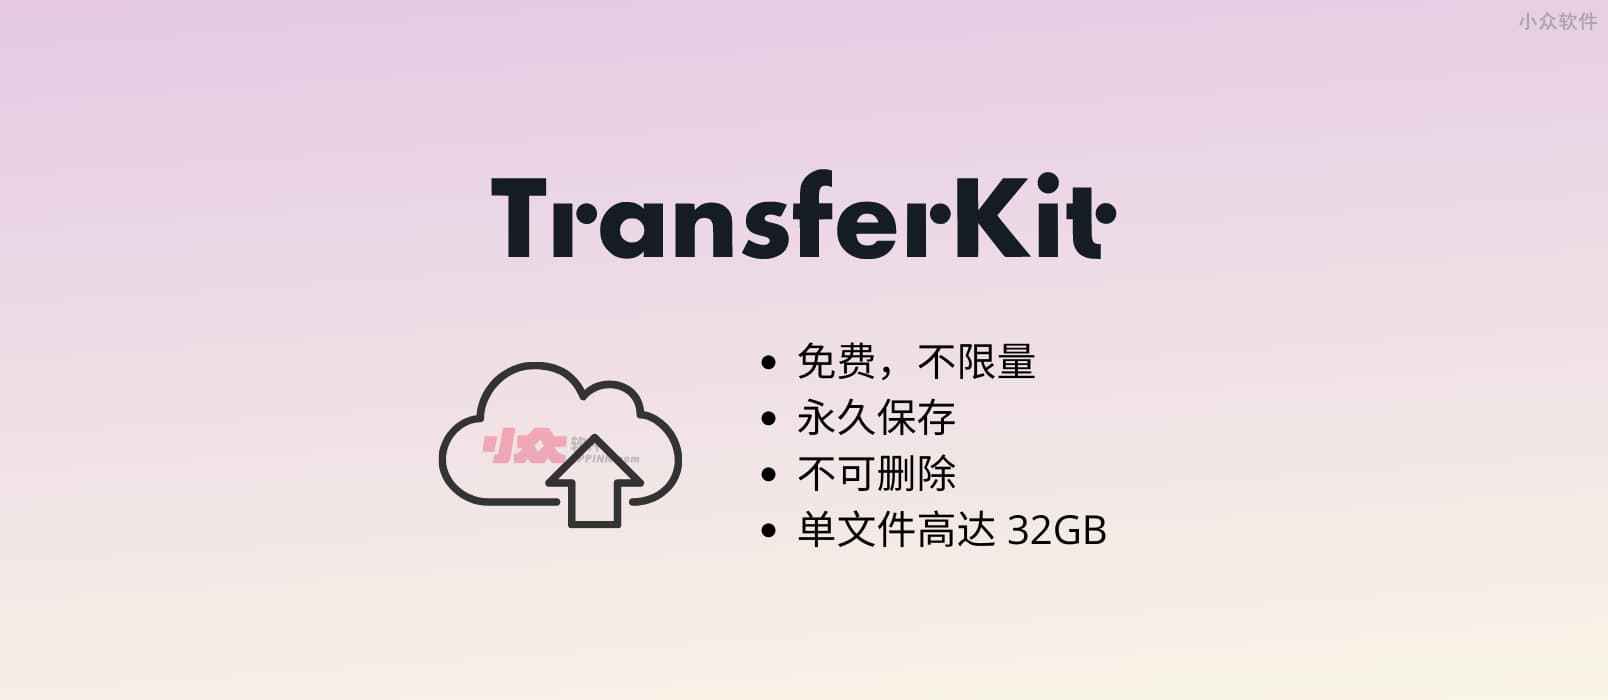 TransferKit - 不限量，免费云存储空间，永久保存，不可删除，单文件高达 32GB